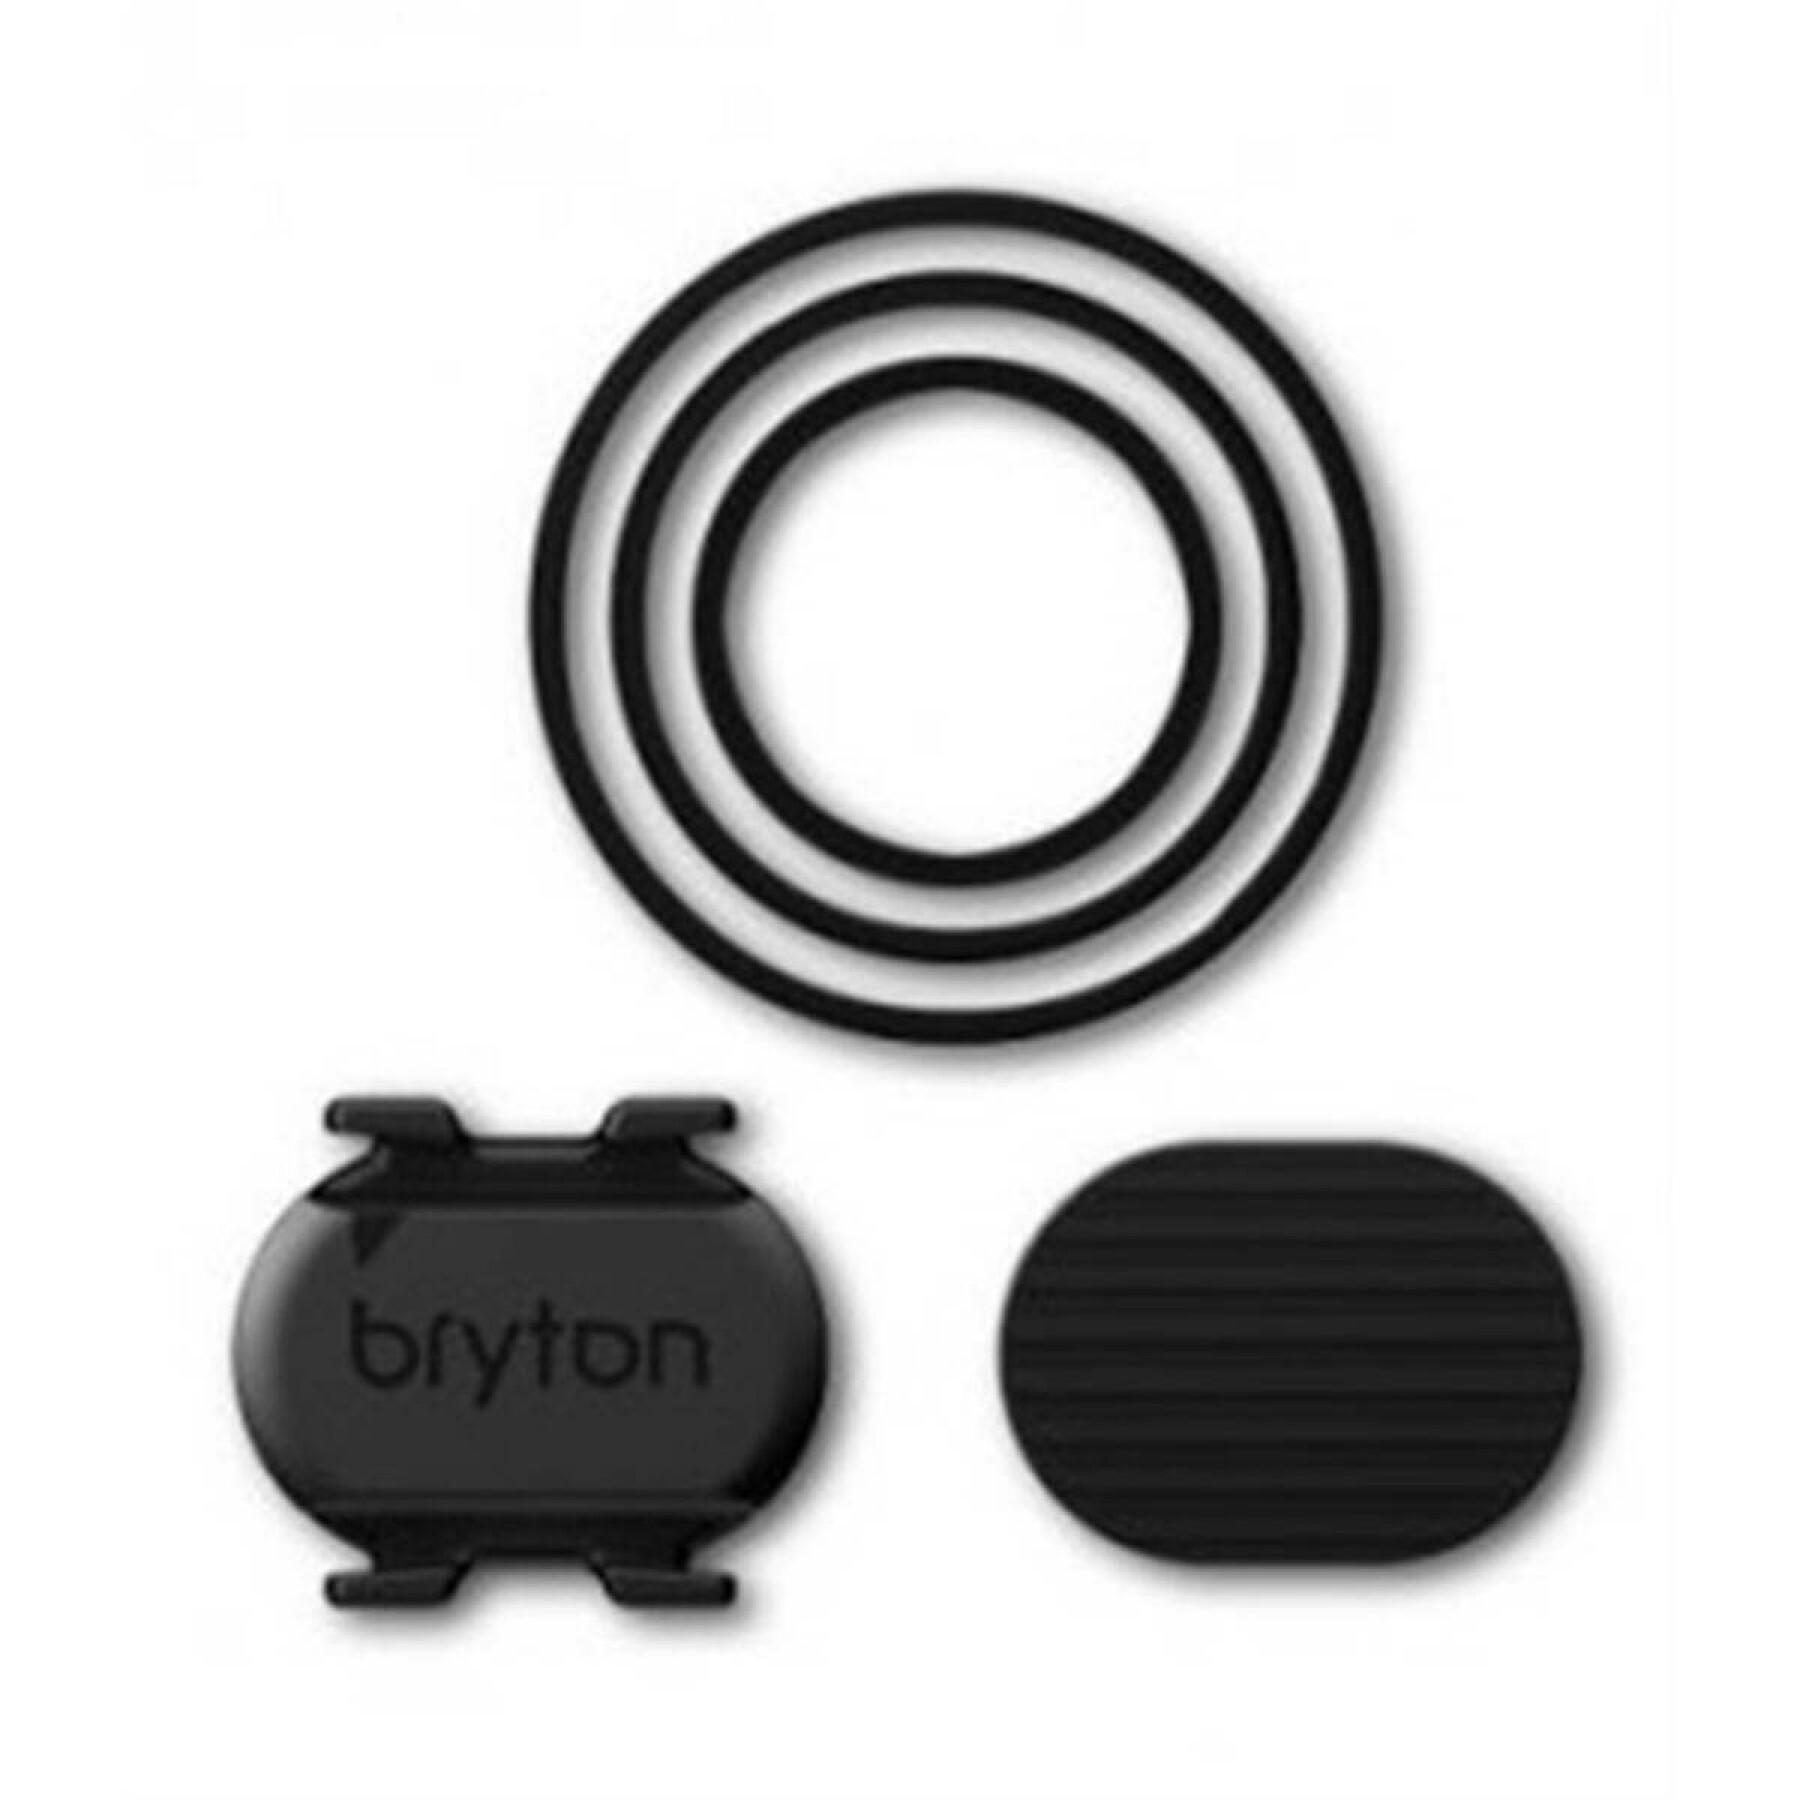 Cadence sensor / in bag Bryton bt & ant+